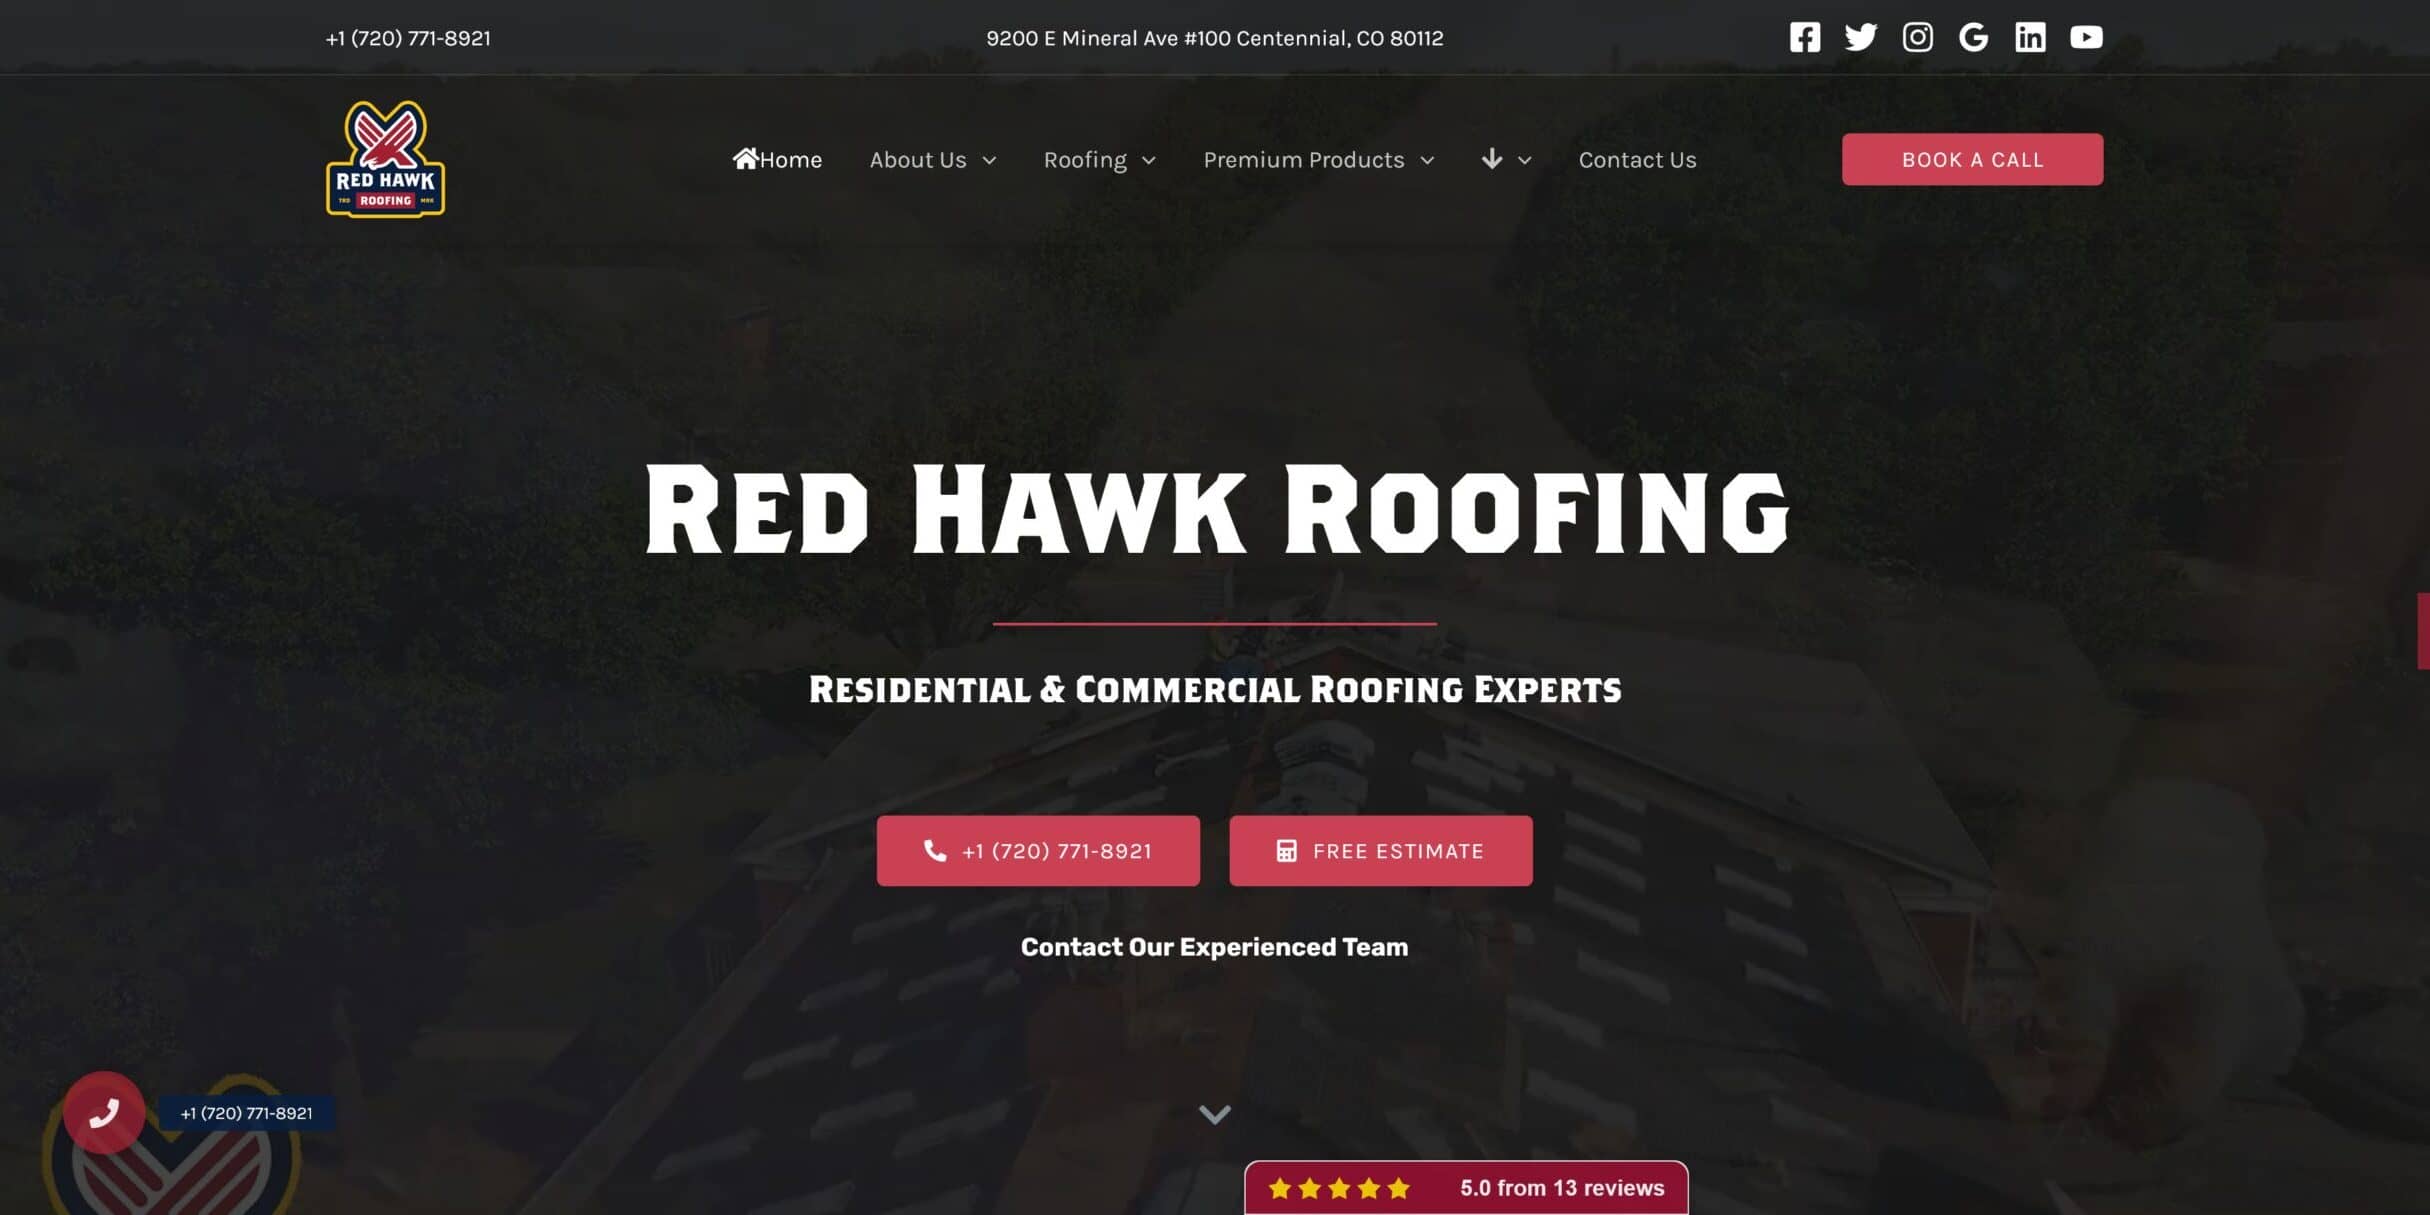 Red hawk roofing - screenshot 1